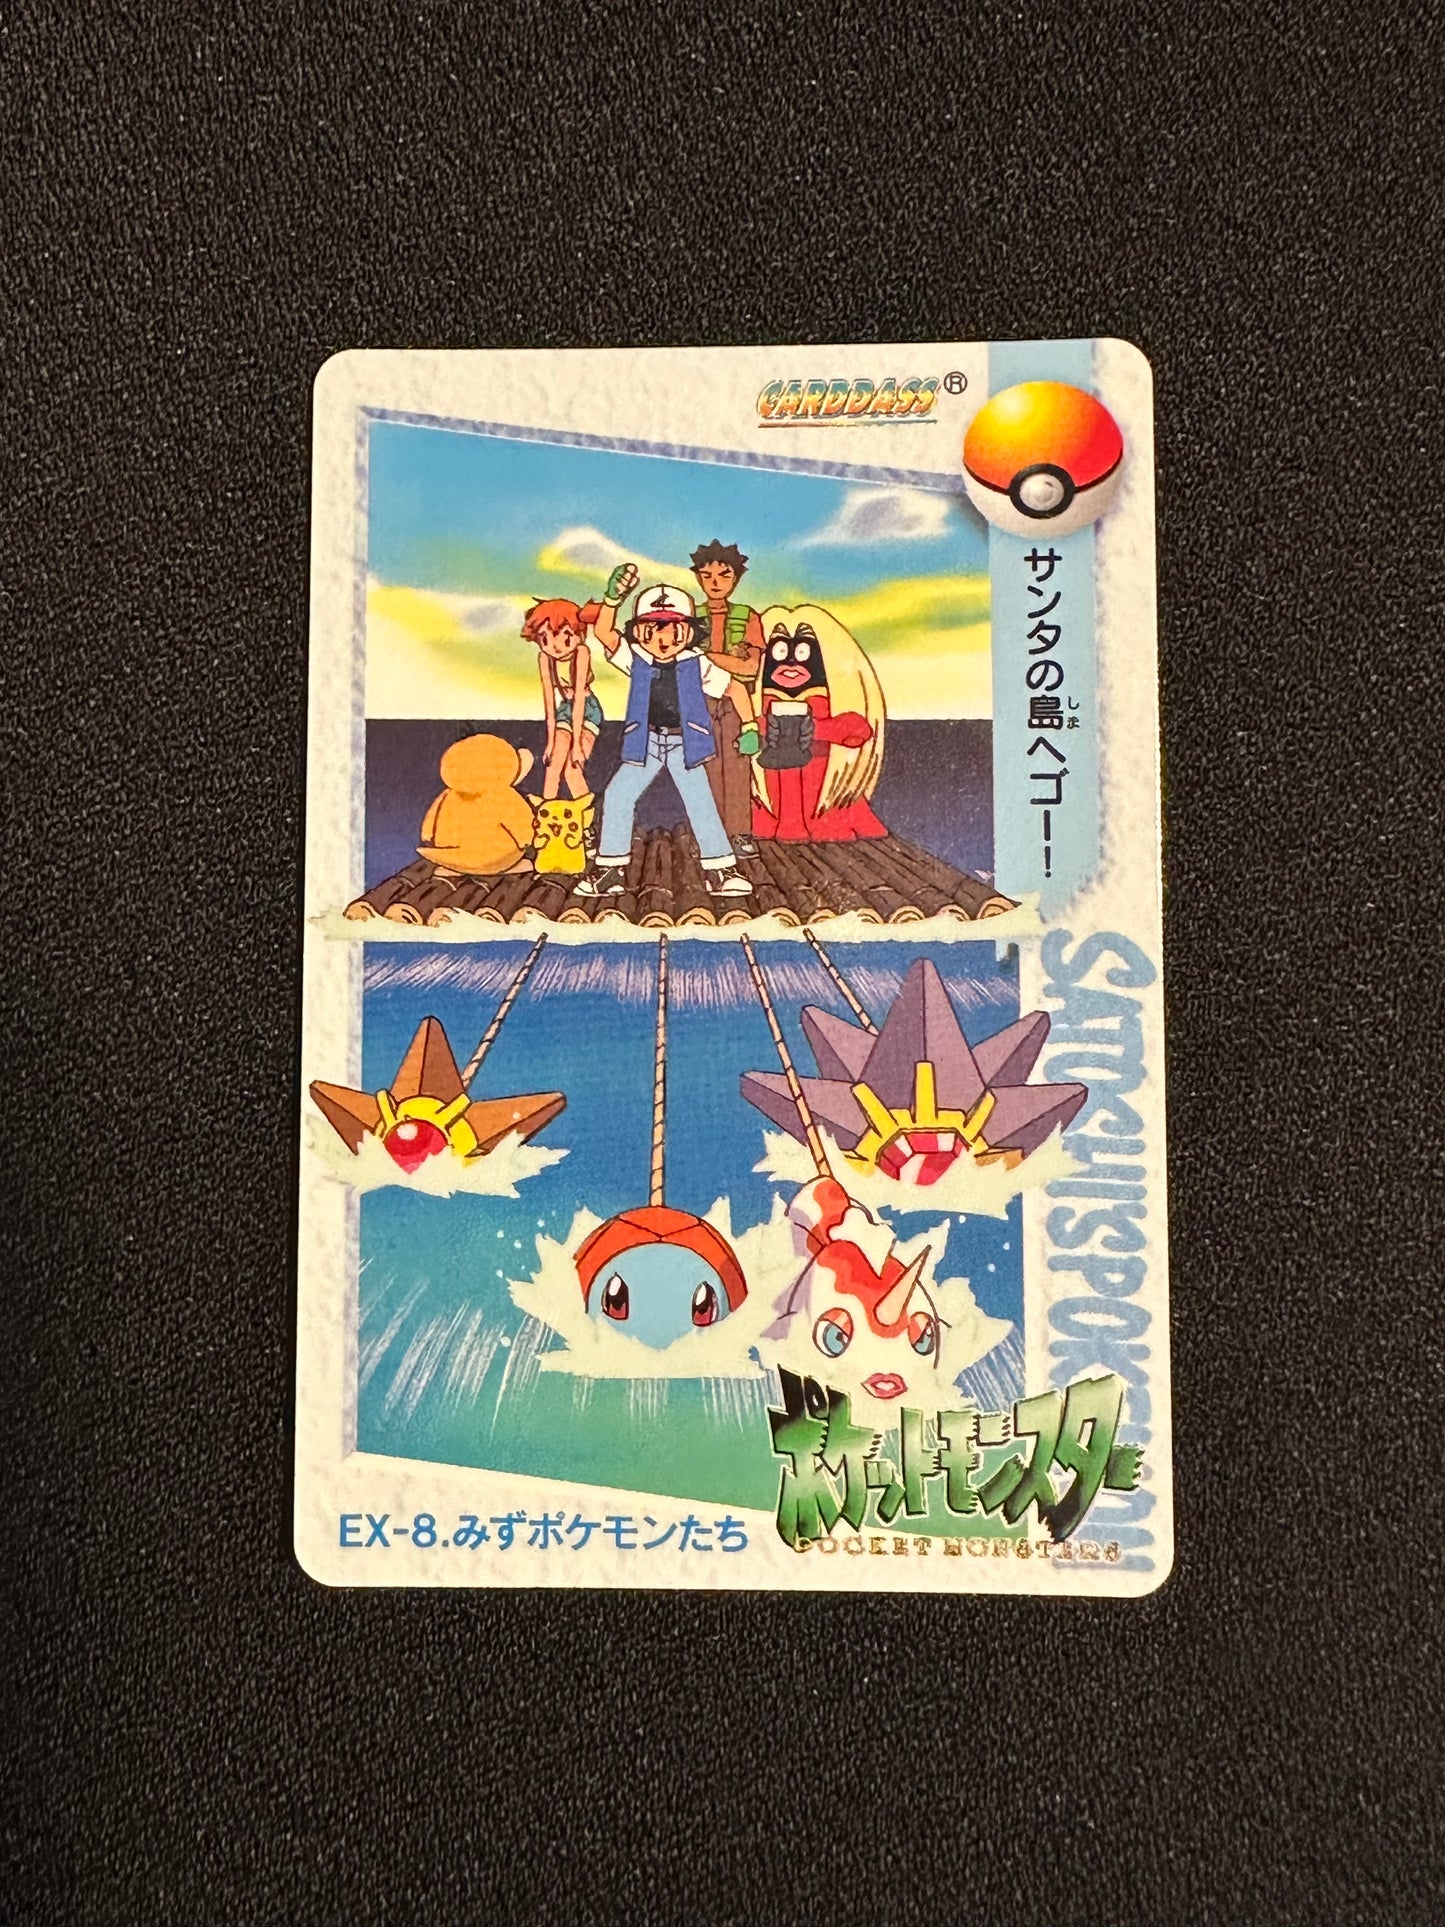 Pokemon Bandai Carddass EX-8 Carddass Anime 1998 Japanese